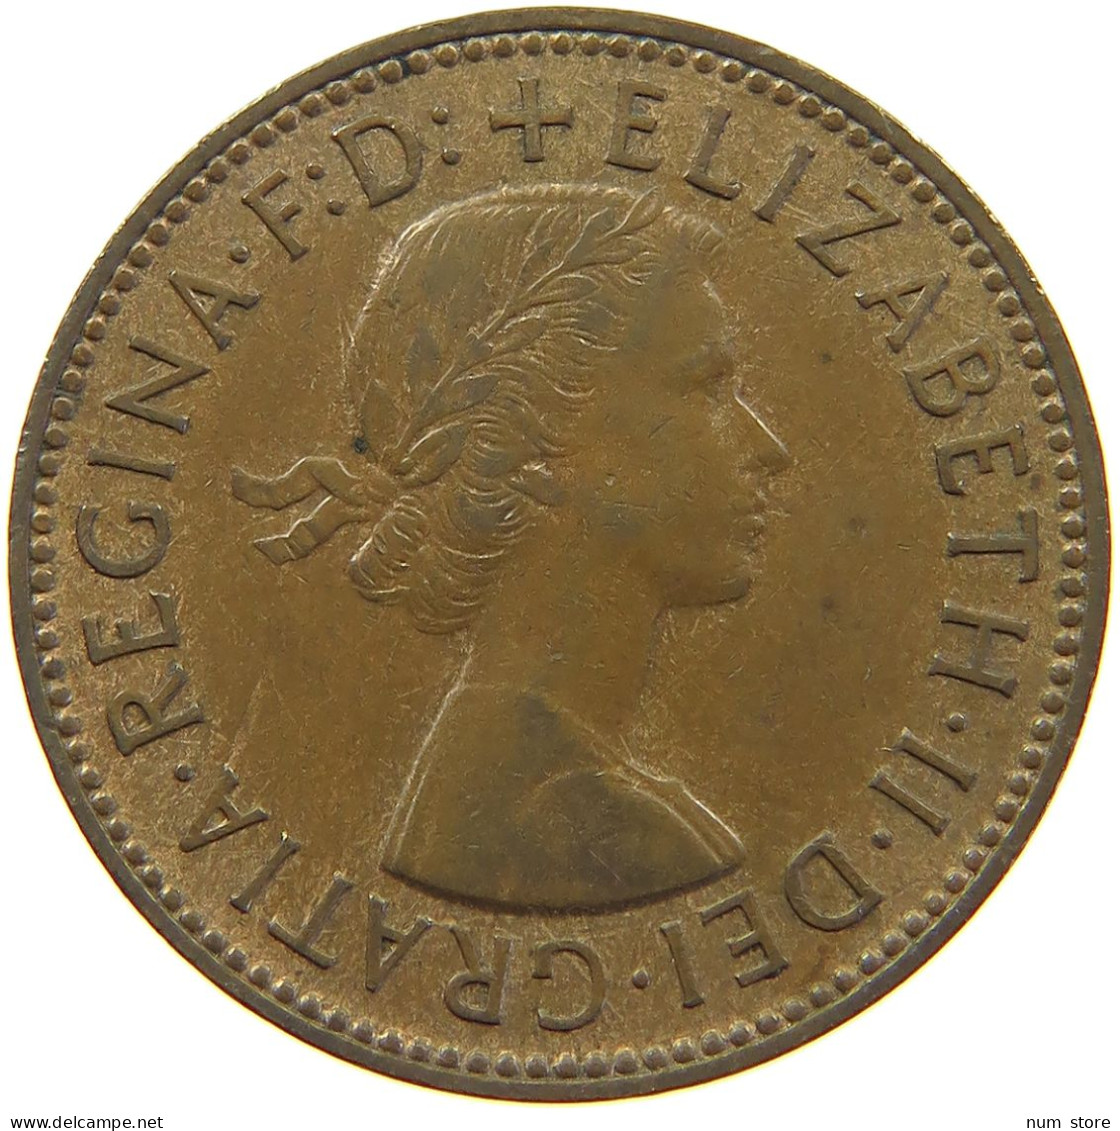 GREAT BRITAIN HALFPENNY 1955 ELIZABETH II. (1952-) #MA 063525 - K. 1/2 Crown